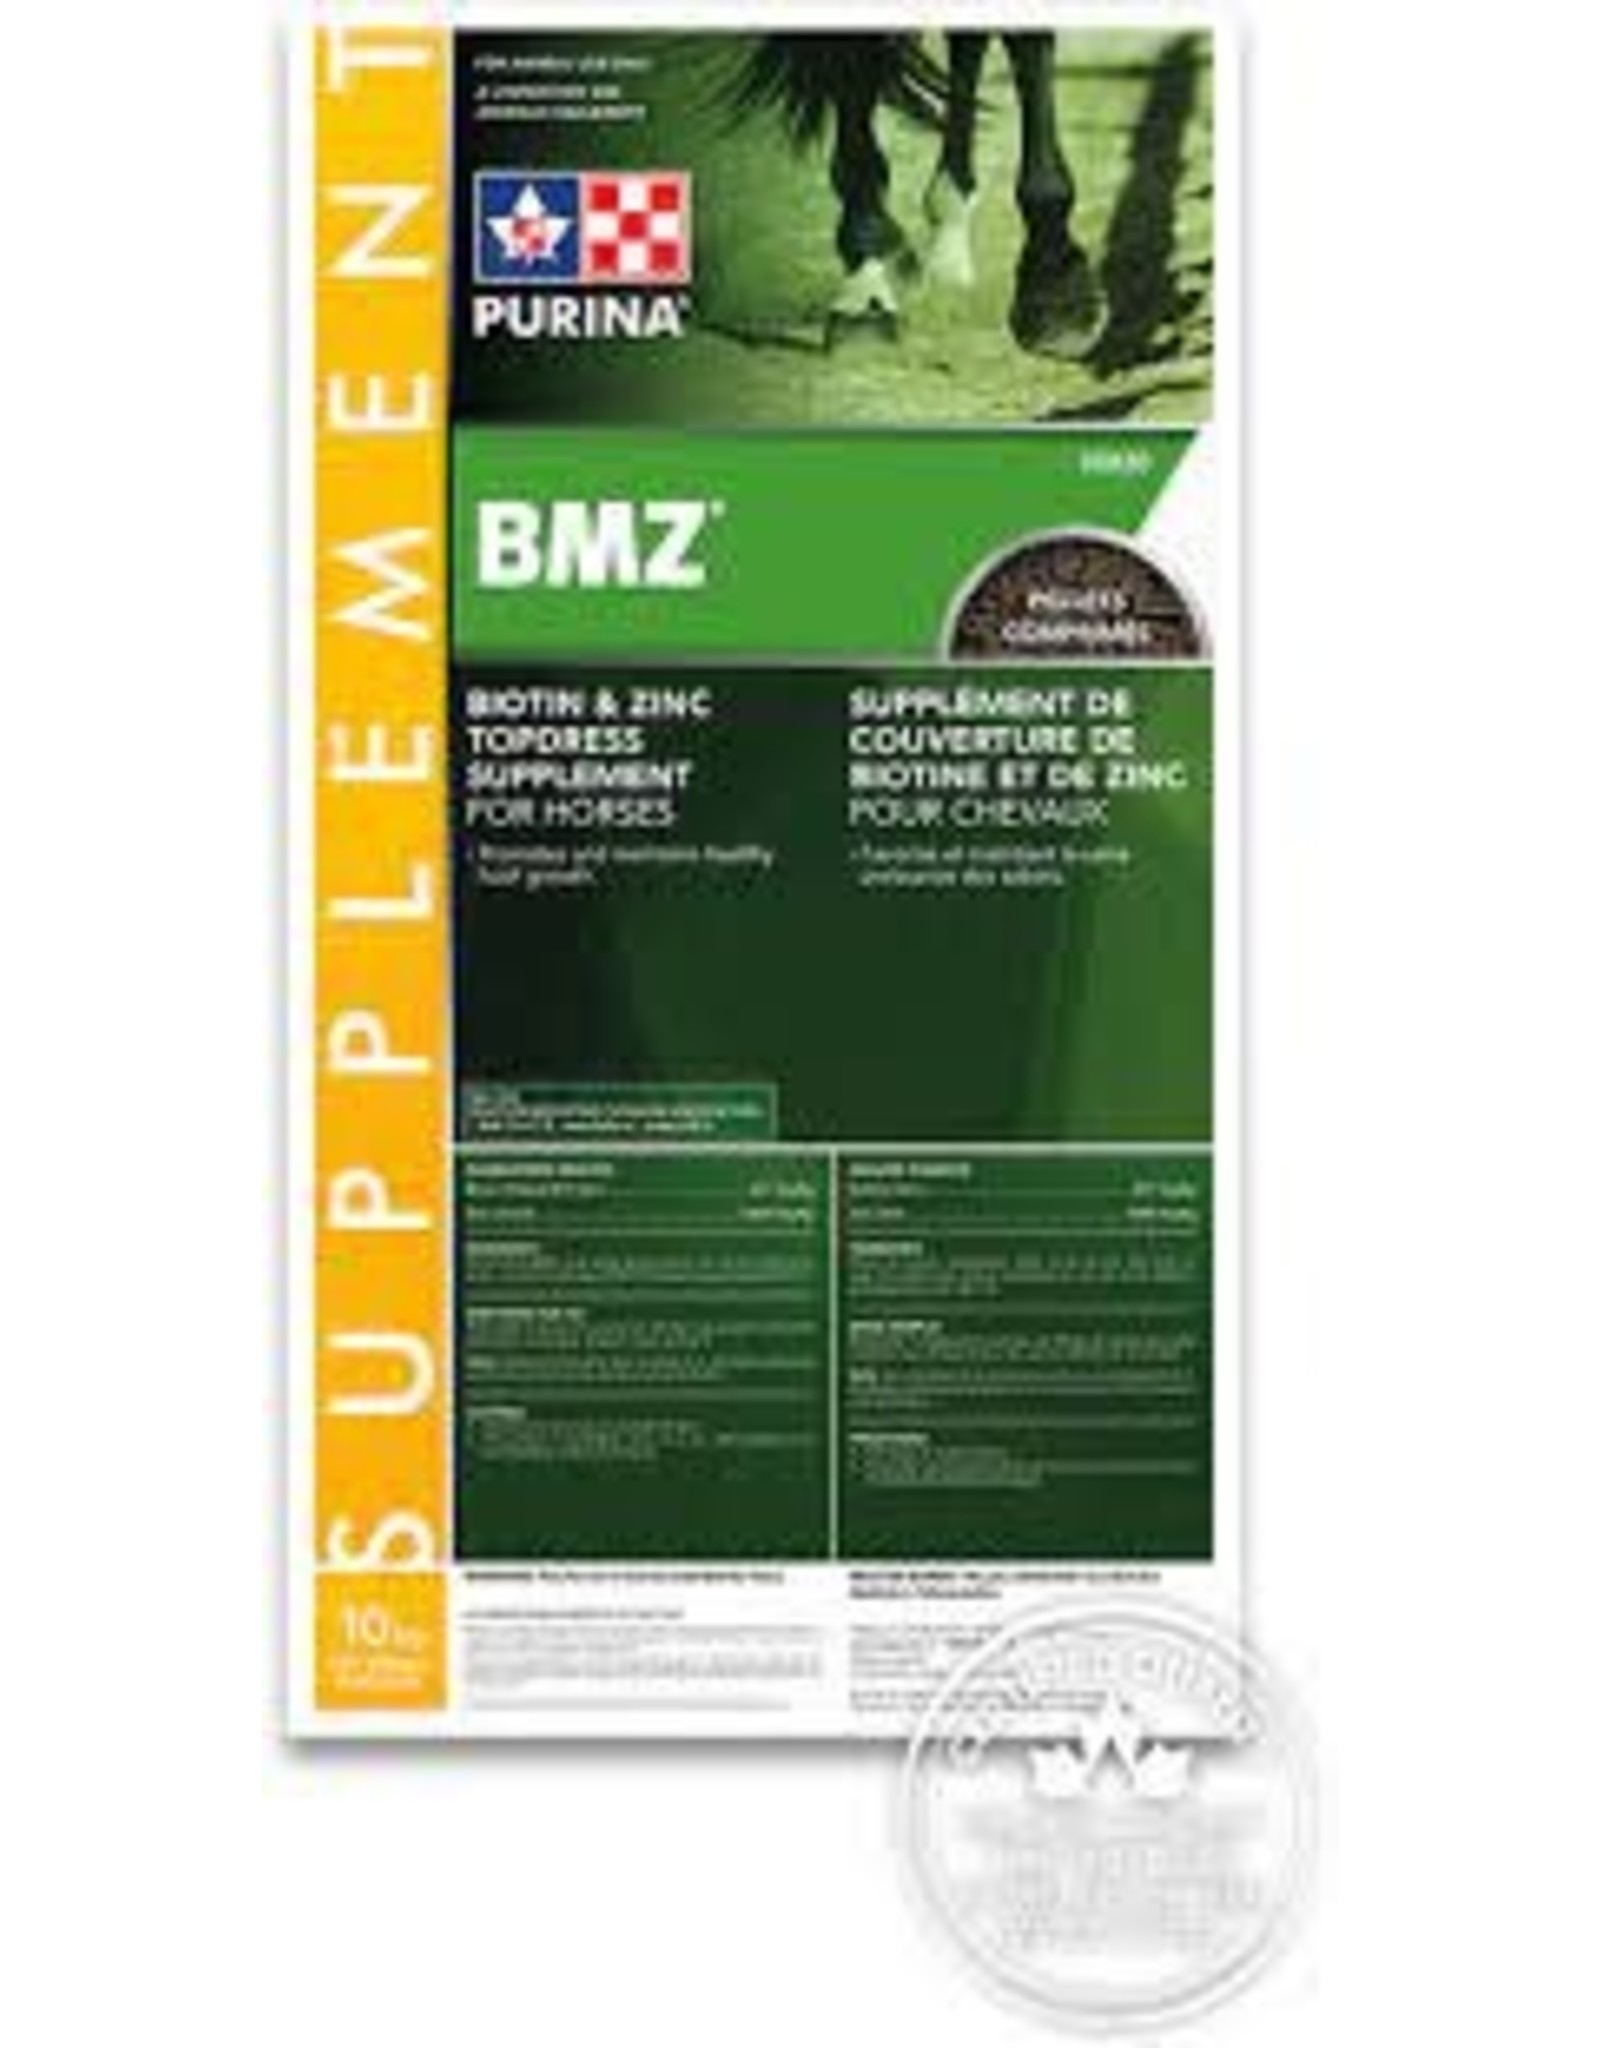 Purina PURINA BMZ  SUPPLEMENT 3kg  - CP35820 - NSC 0% - Hoof supplement - Contains biotin, methionine and organic zinc.